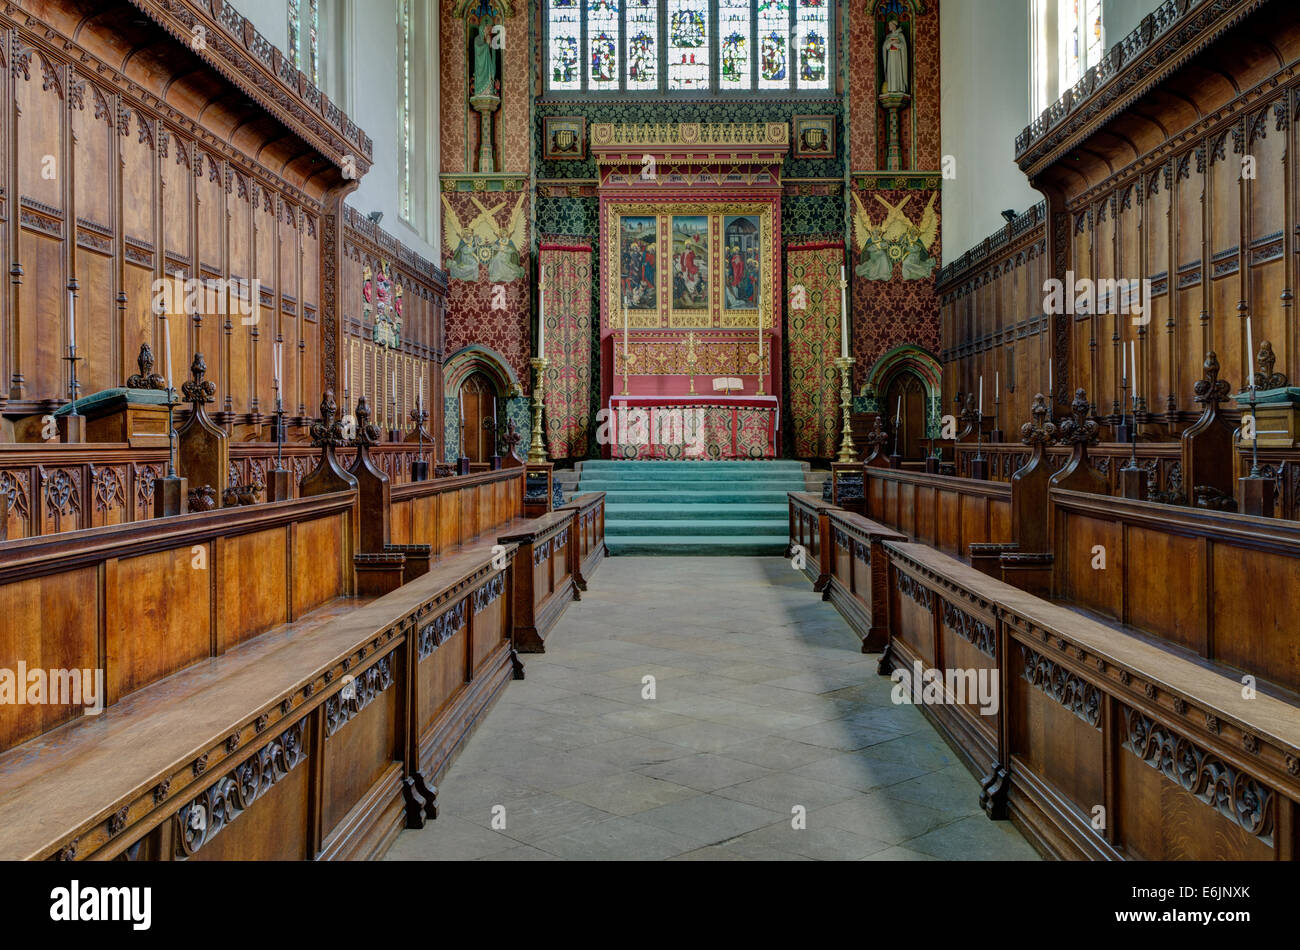 The interior of Queen's College chapel, Cambridge, UK Stock Photo